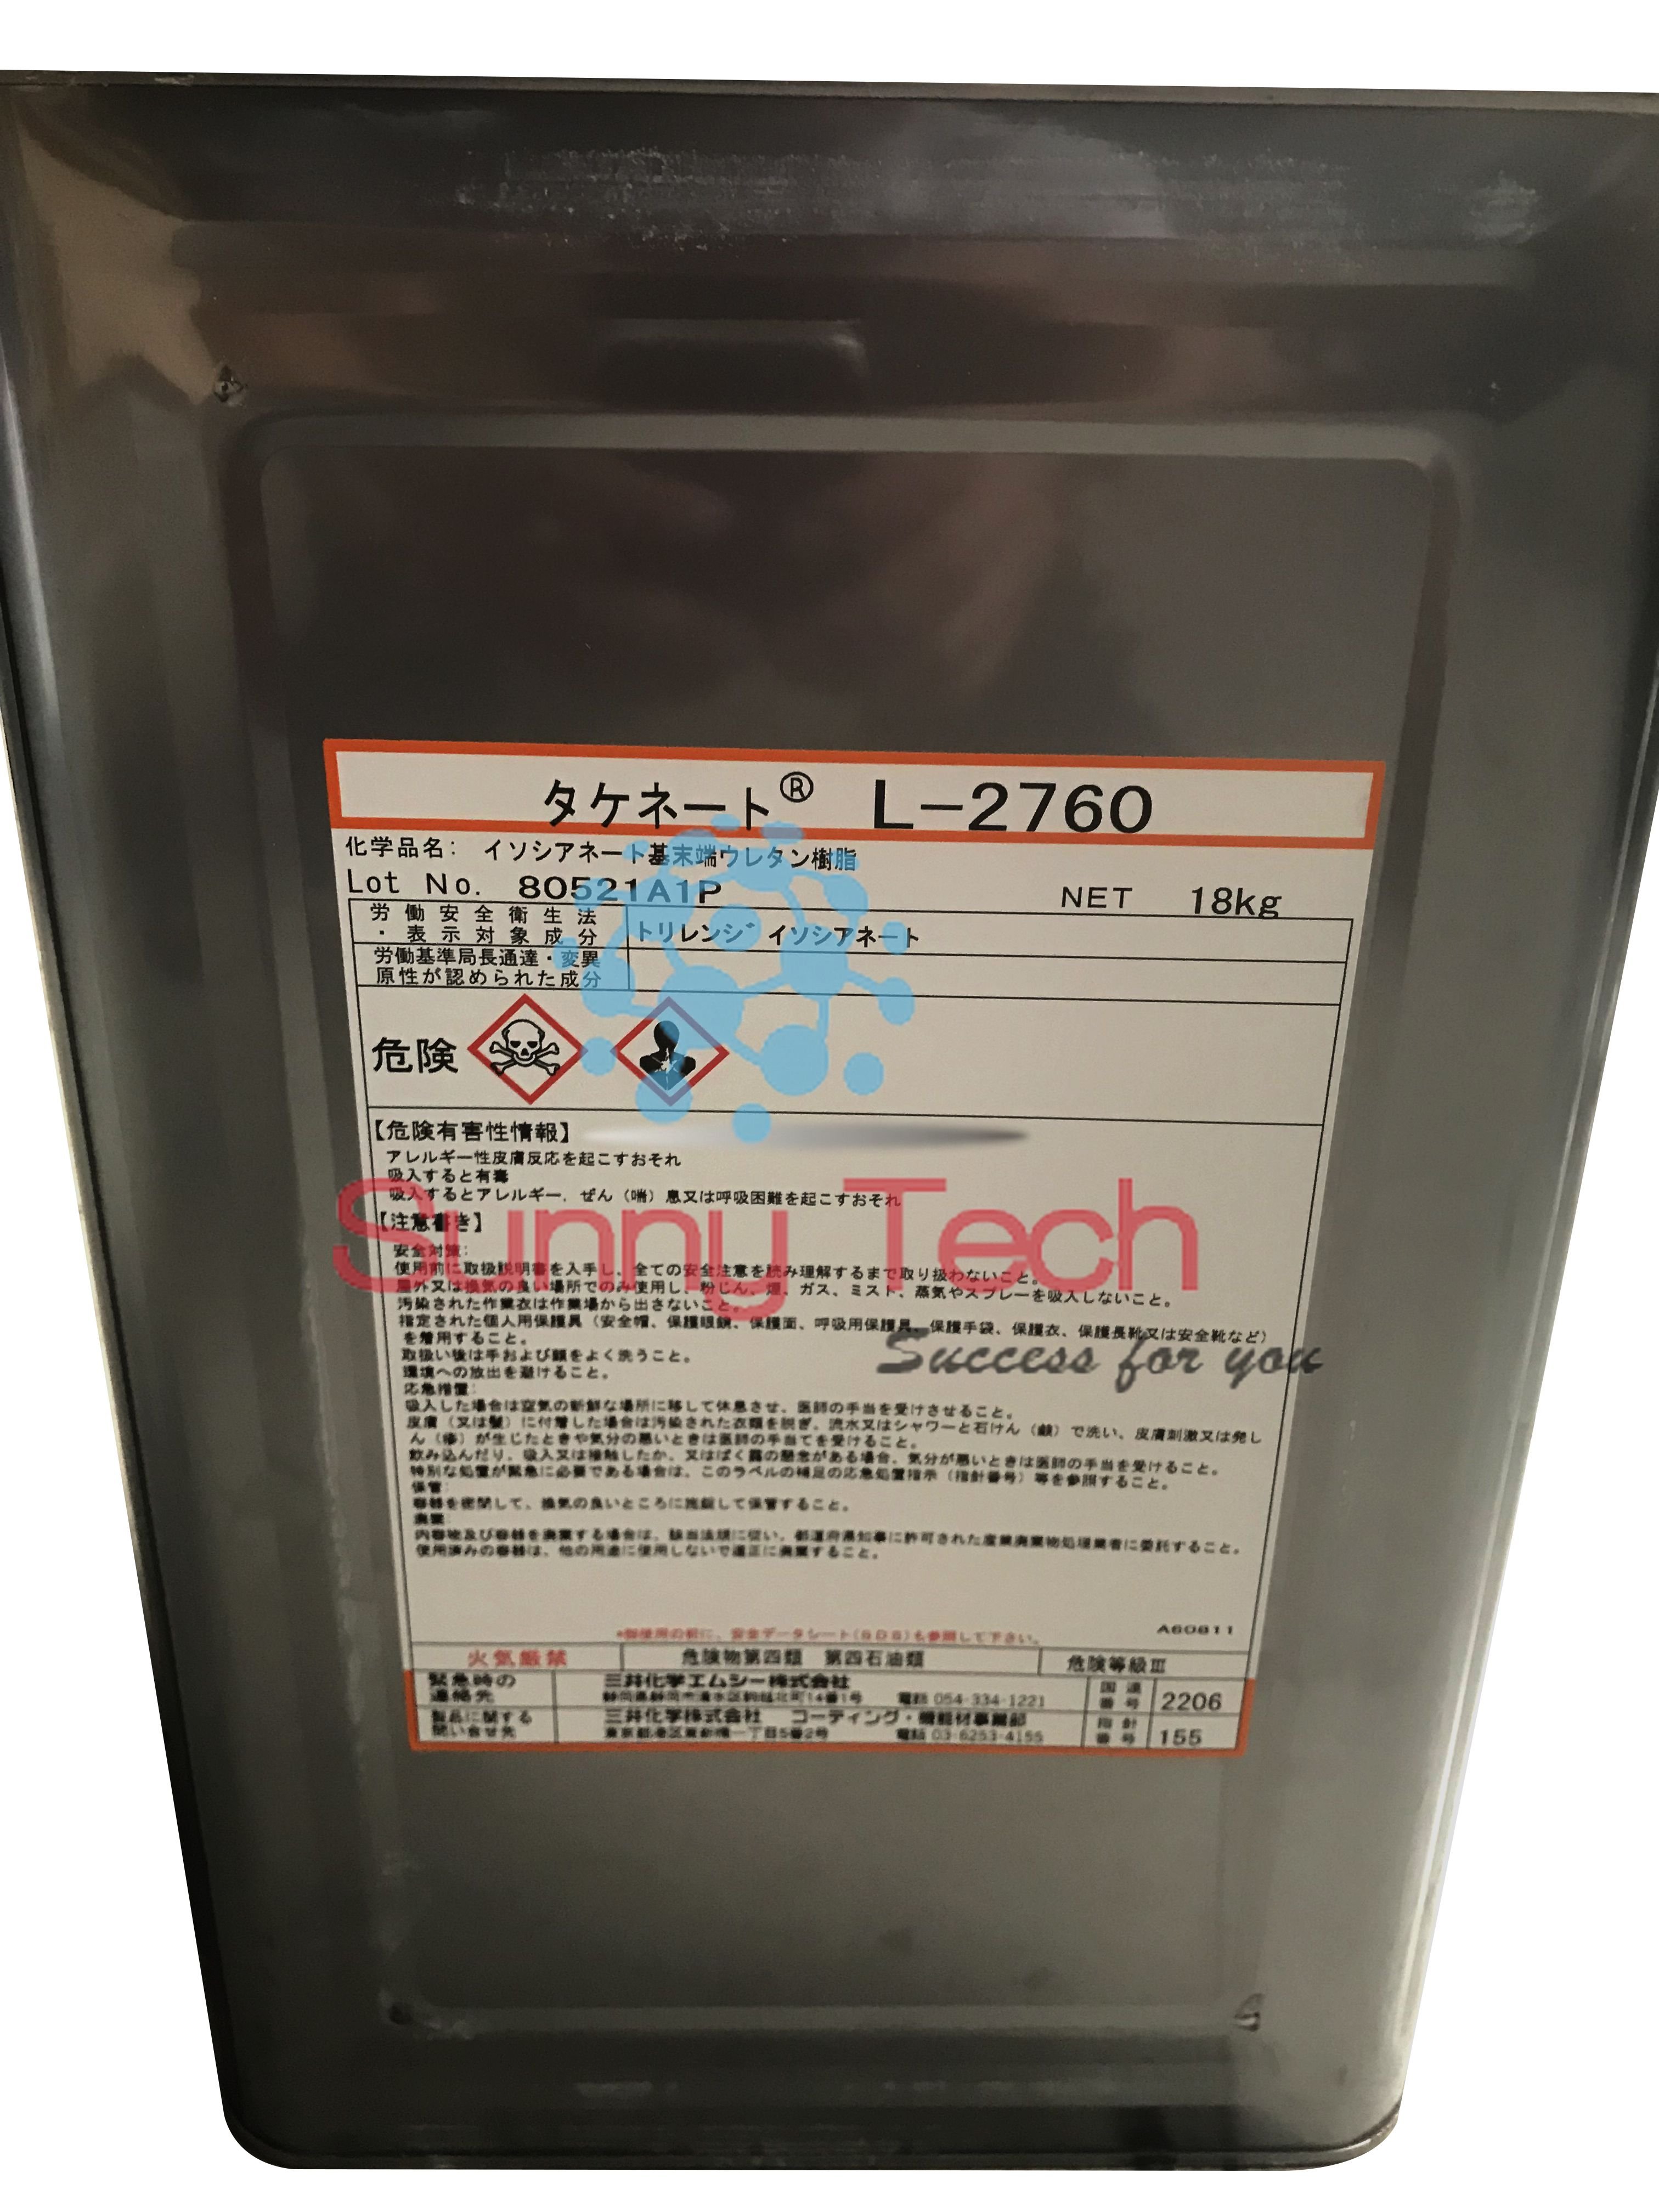 TAKENATETM L-2760 - Hóa Chất Cao Su Sunny Tech - Công Ty TNHH Sunny Tech